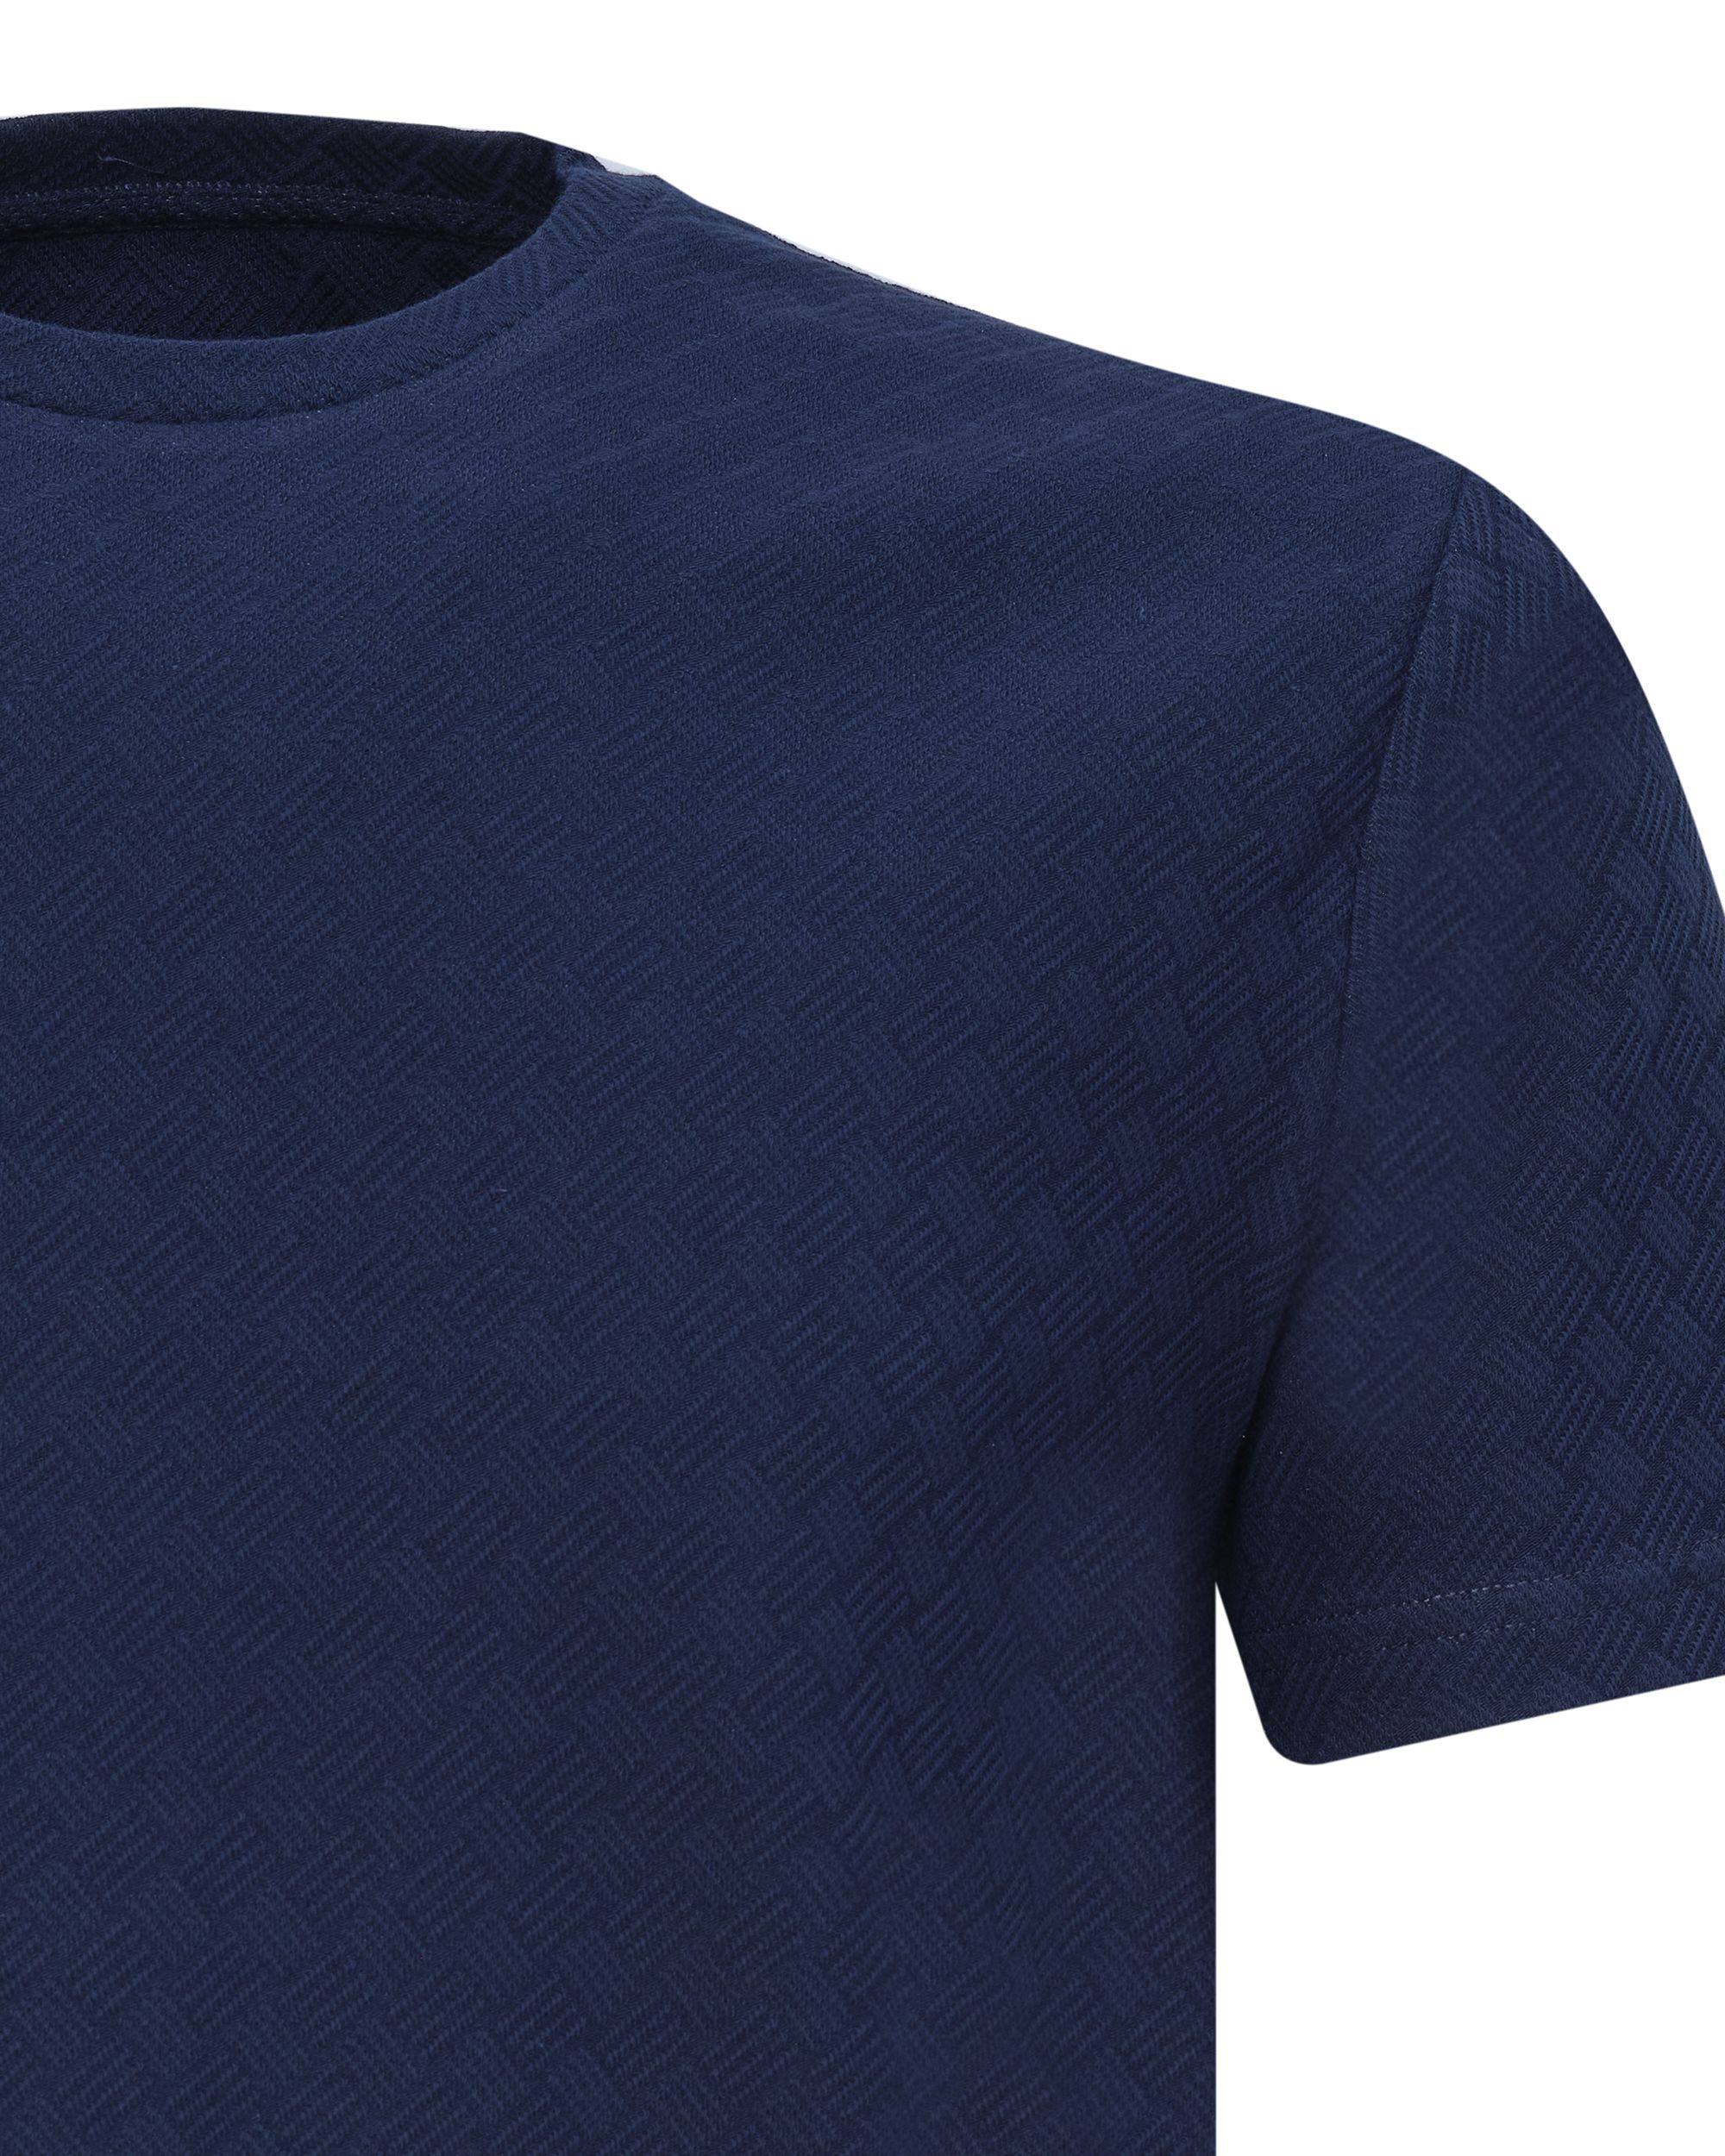 Cruyff Casco T-shirt KM Donker blauw 078801-001-L